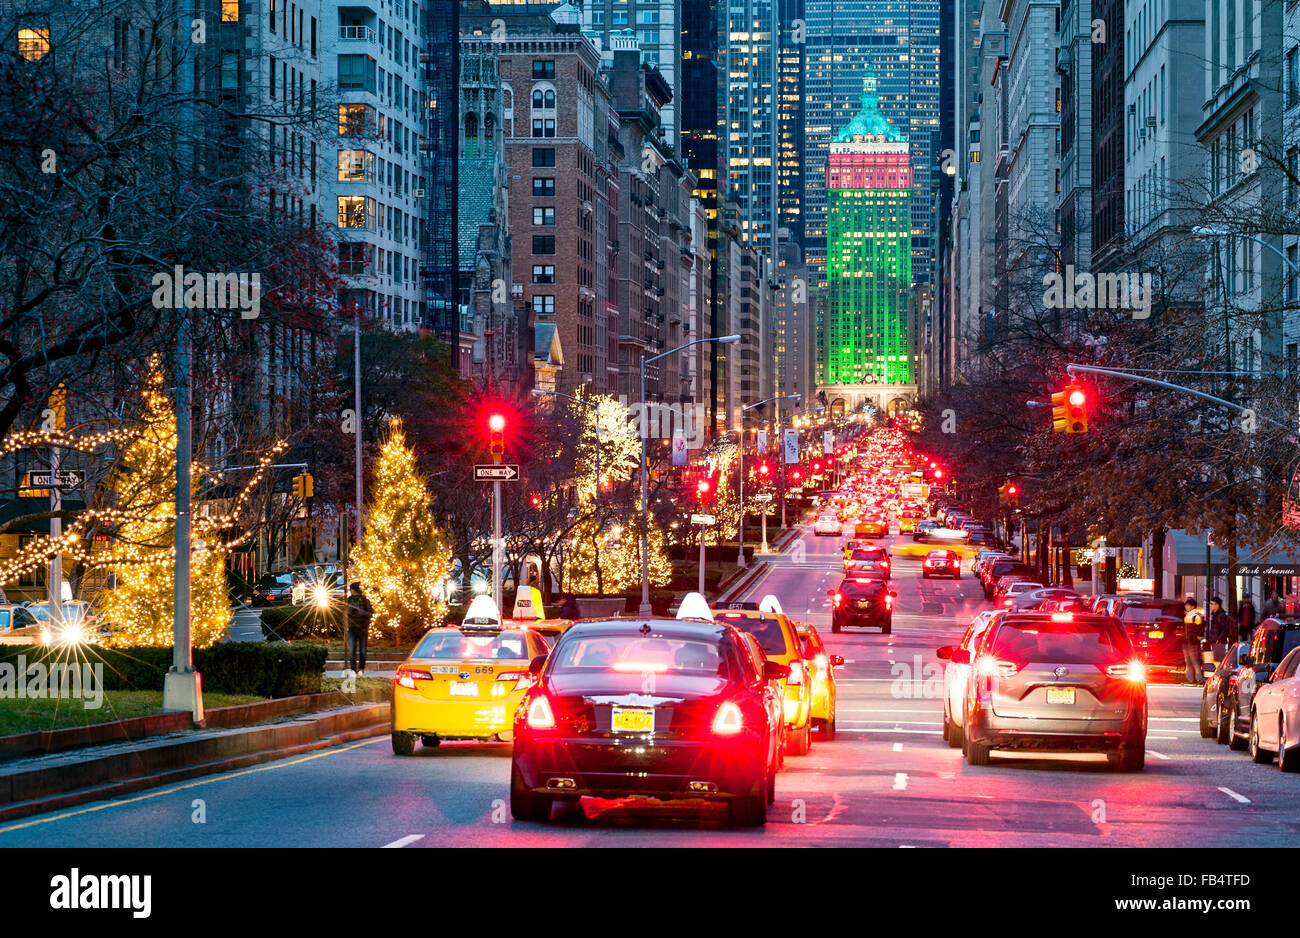 New York Christmas New York Street Park Avenue Decorations New York City Christmas Trees Traffic Stock Photo